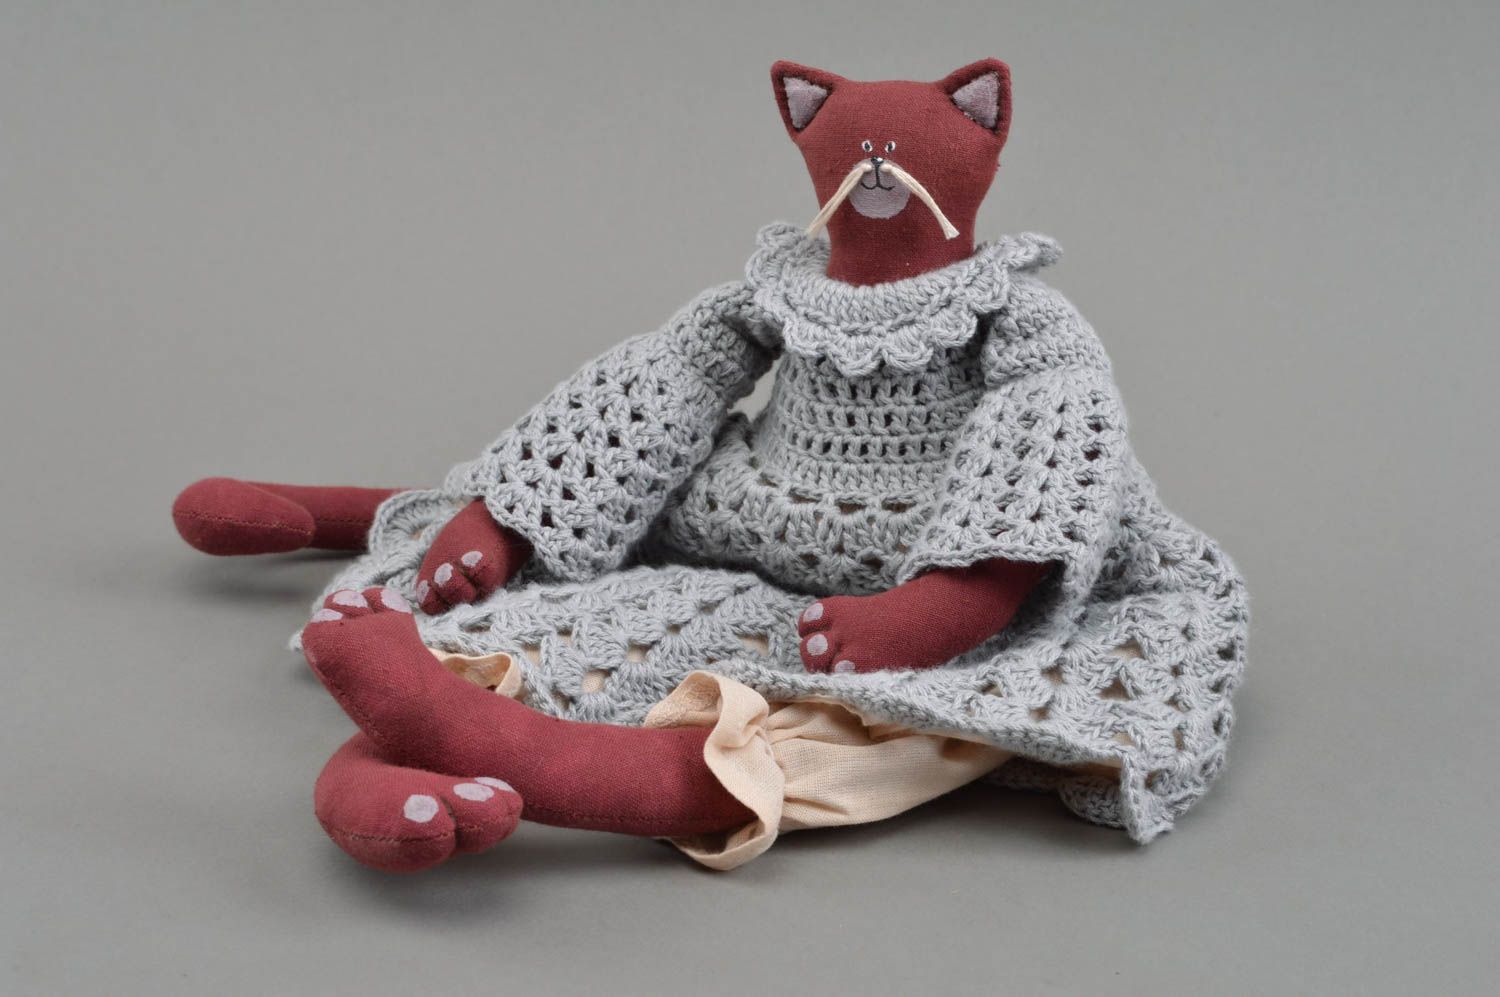 Handmade fabric cat toy in crocheted dress designer interior decor ideas photo 3